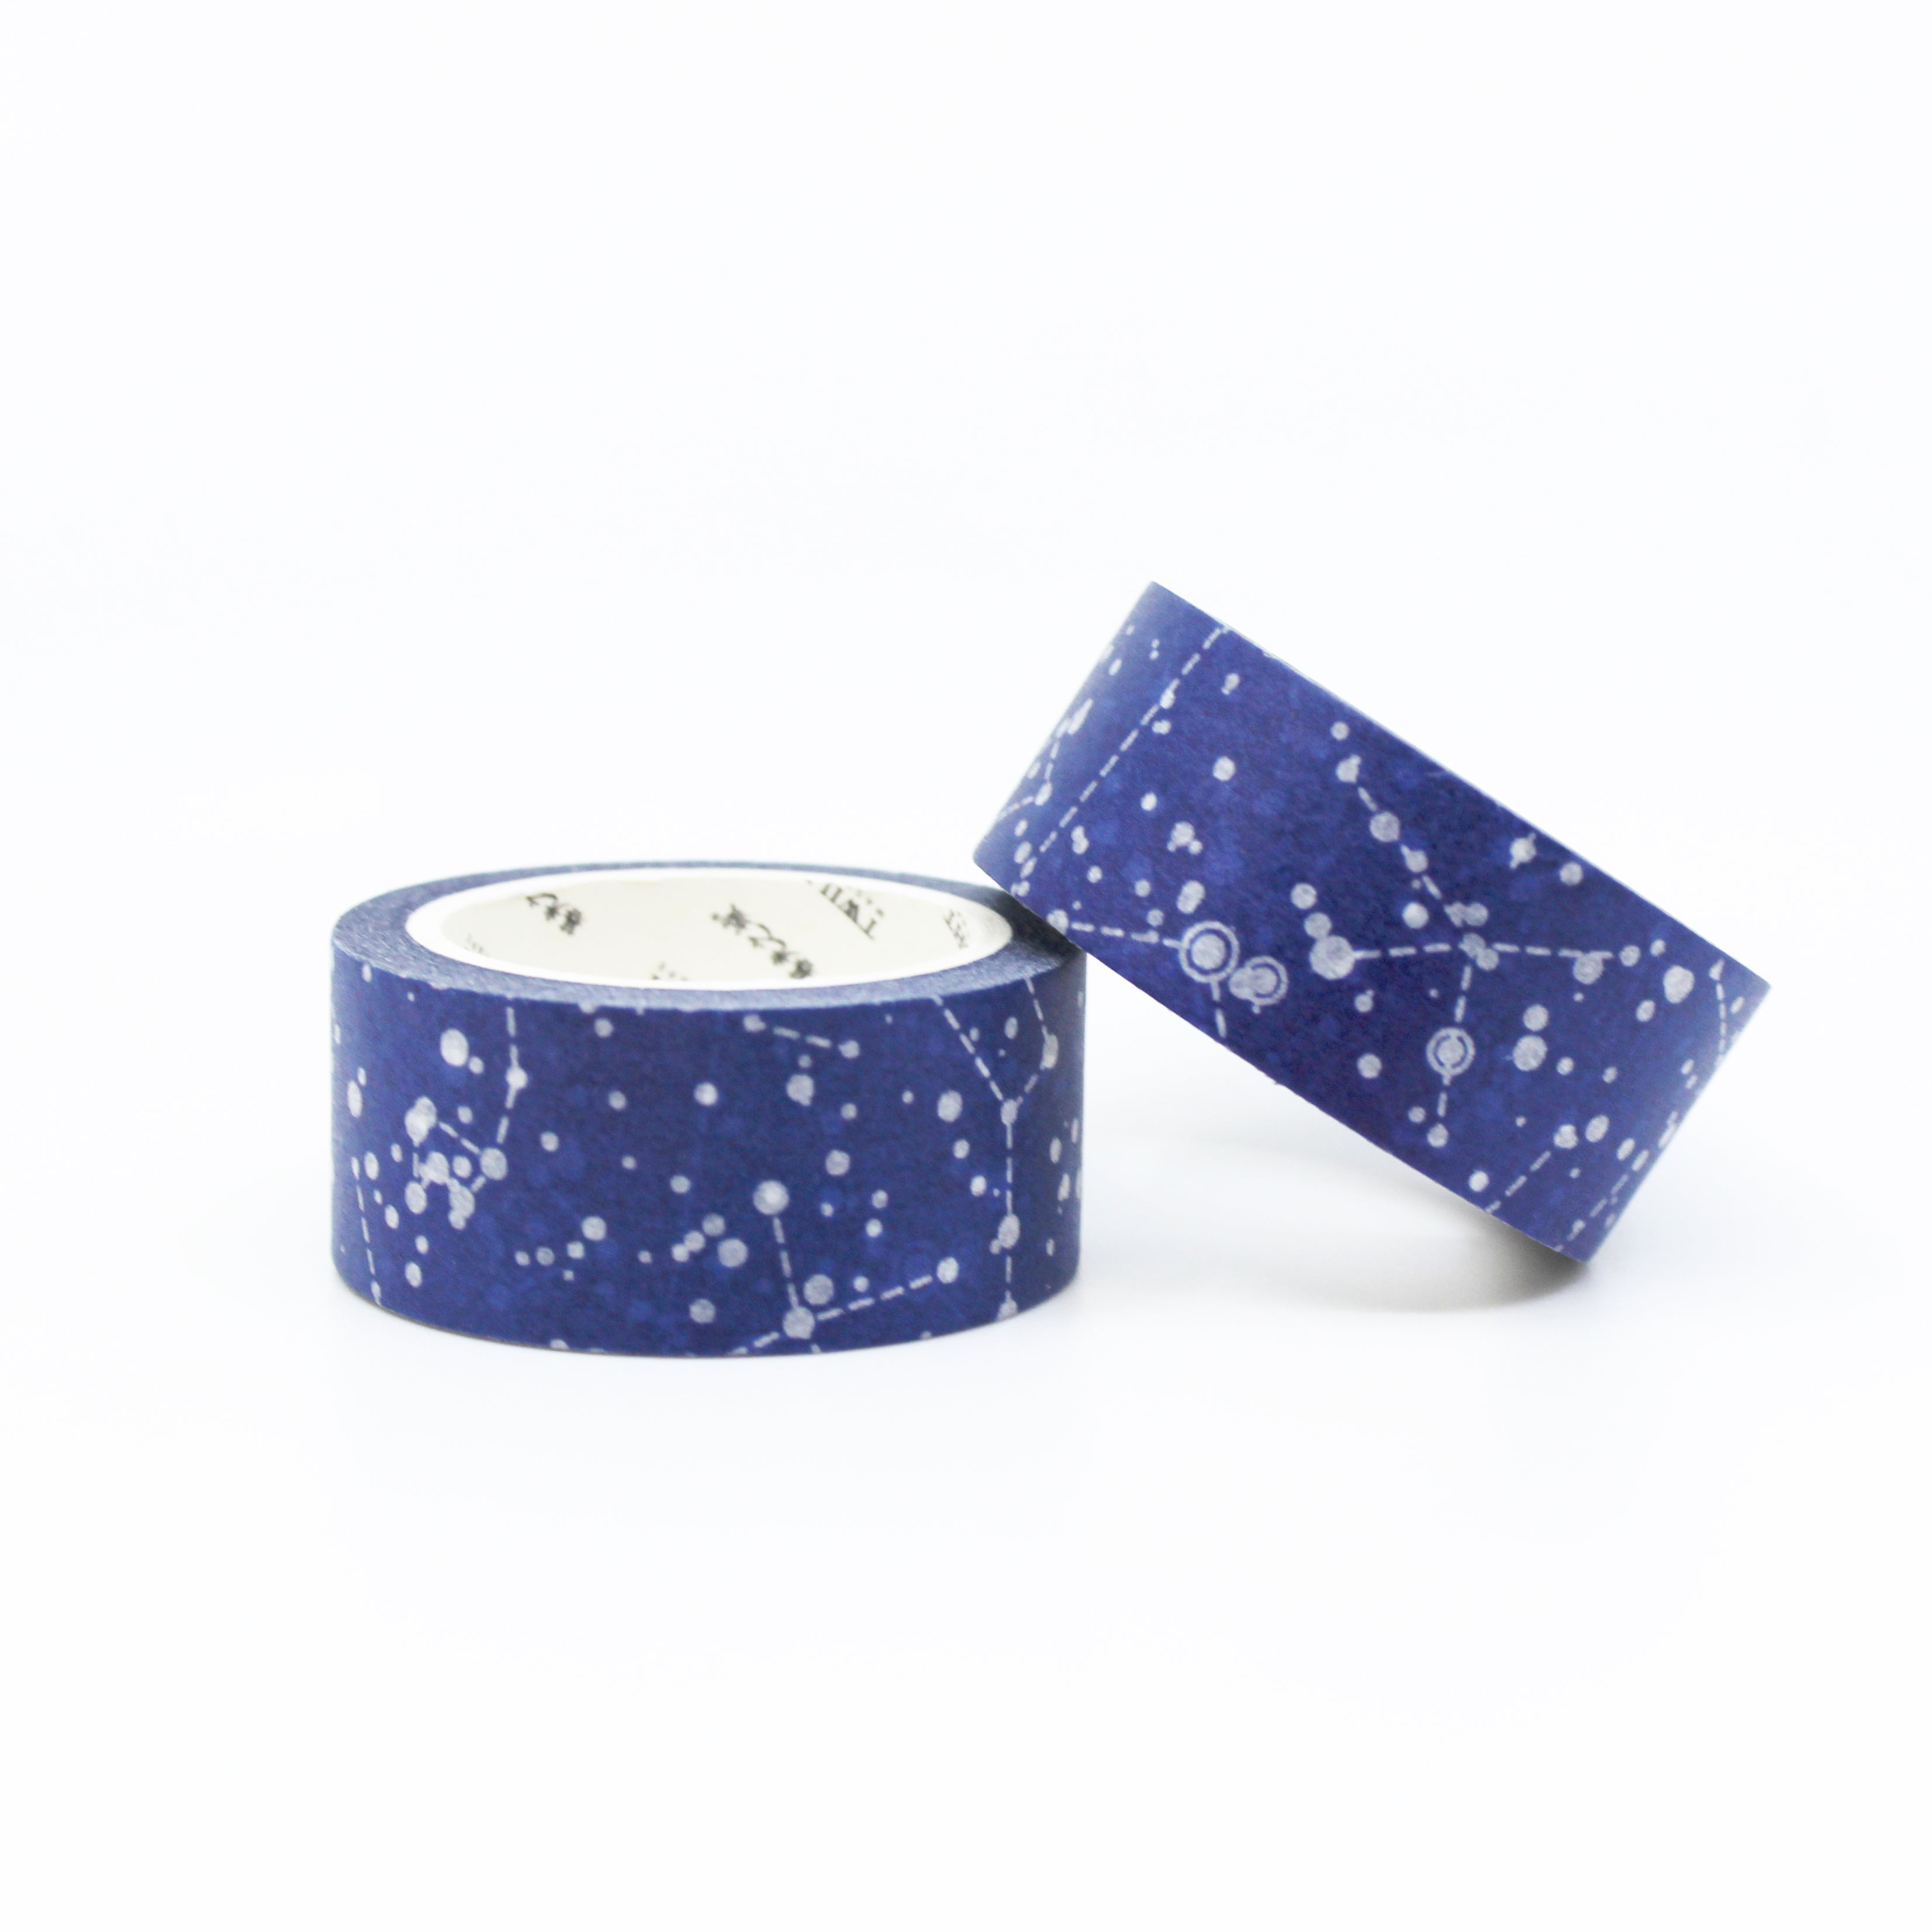 Star Constellation Washi Tapes